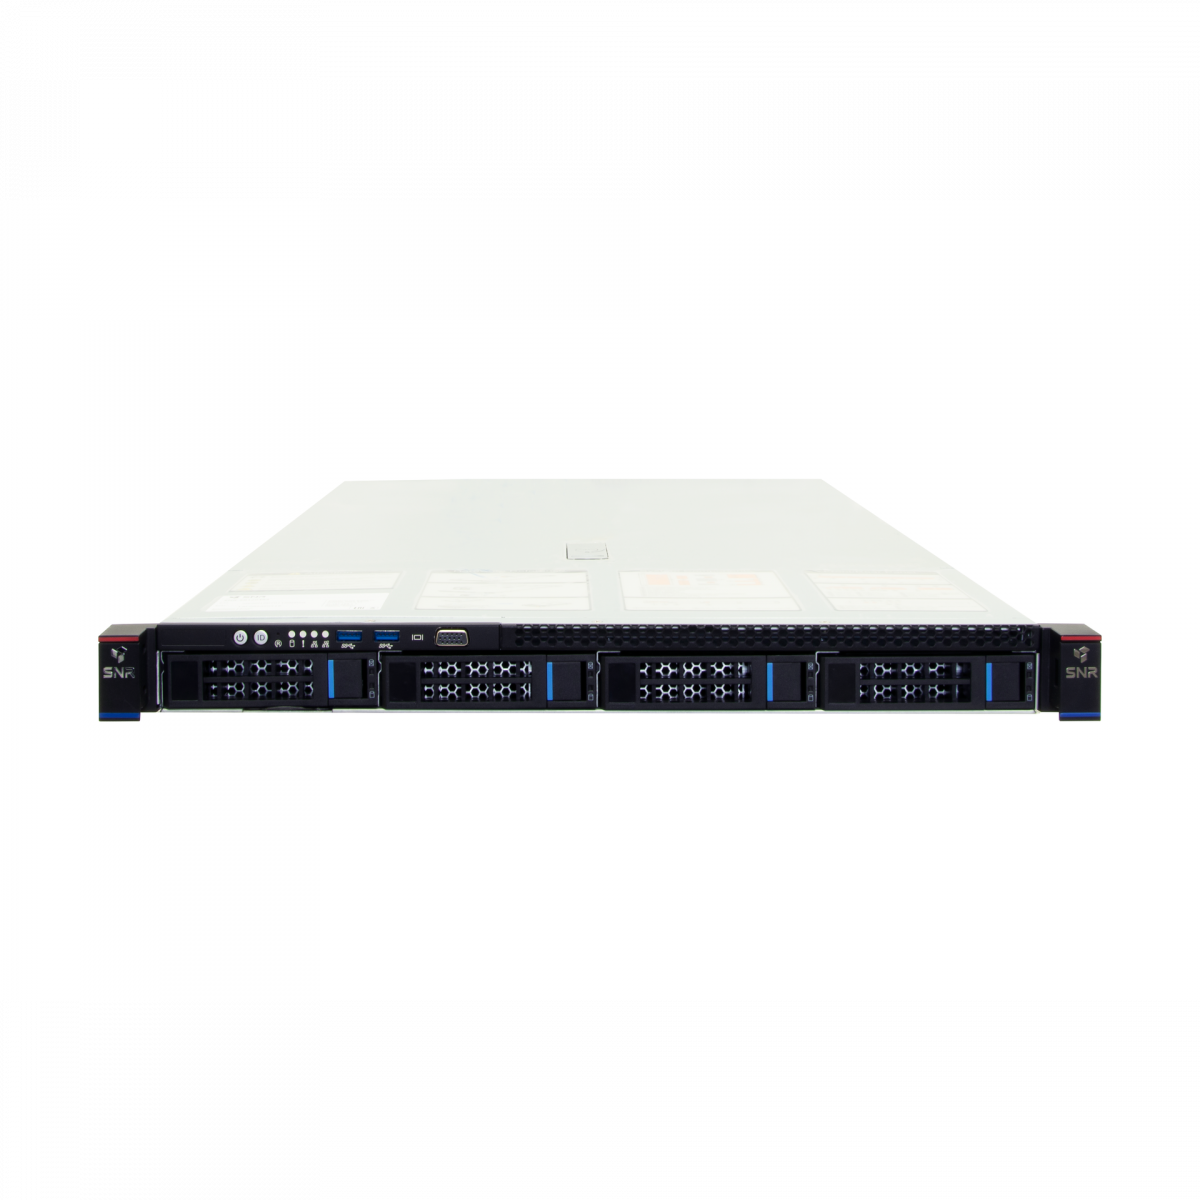 Серверная платформа SNR-SR1204RE, 1U, EPYC, DDR4, 4xHDD, резервируемый БП